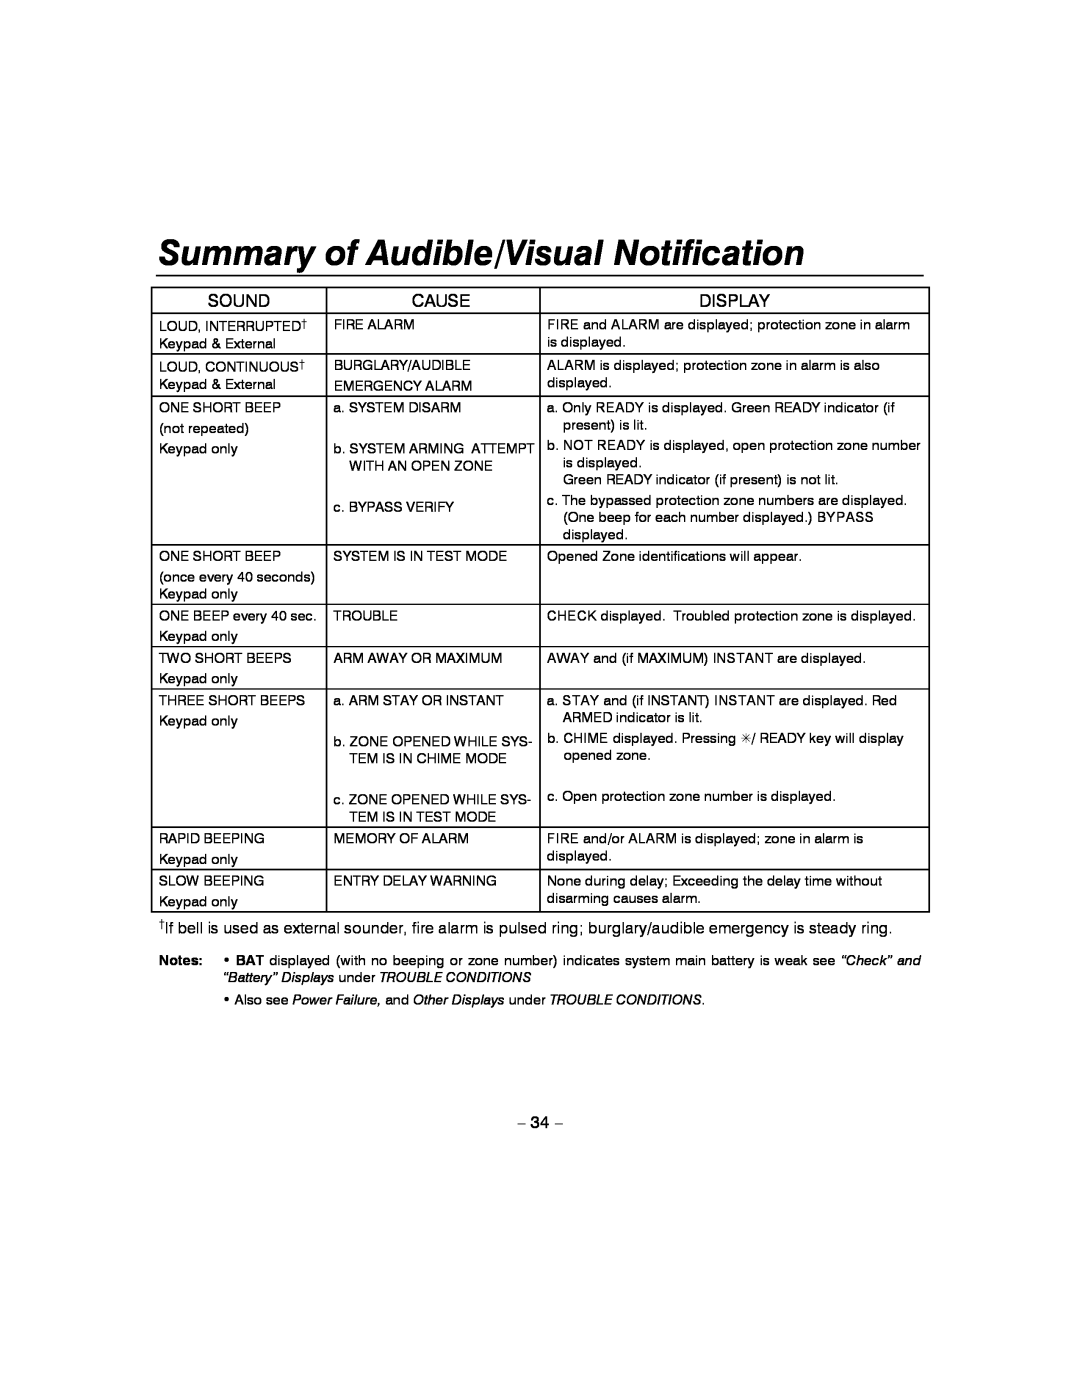 Honeywell 4110XM manual Summary of Audible/Visual Notification, Sound, Cause, Display 